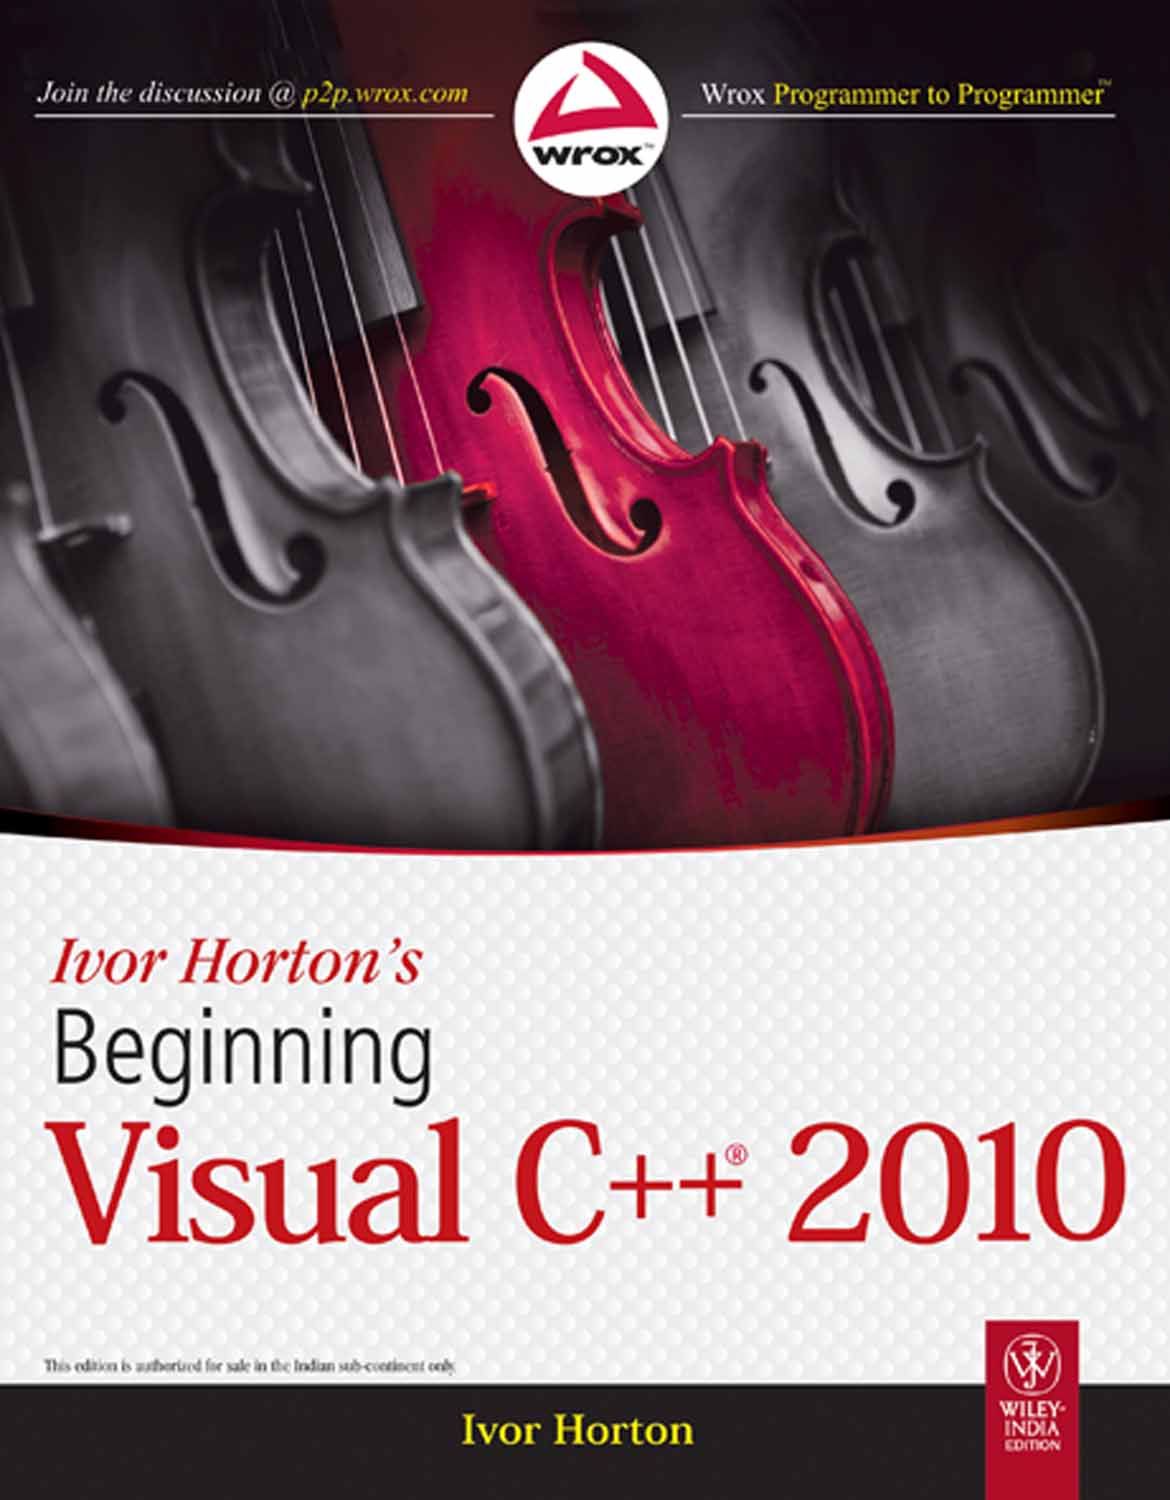 Beginning Visual C# 2010 (Wrox Programmer to Programmer) Karli Watson, Christian Nagel, Jacob Hammer Pedersen and Jon D. Reid